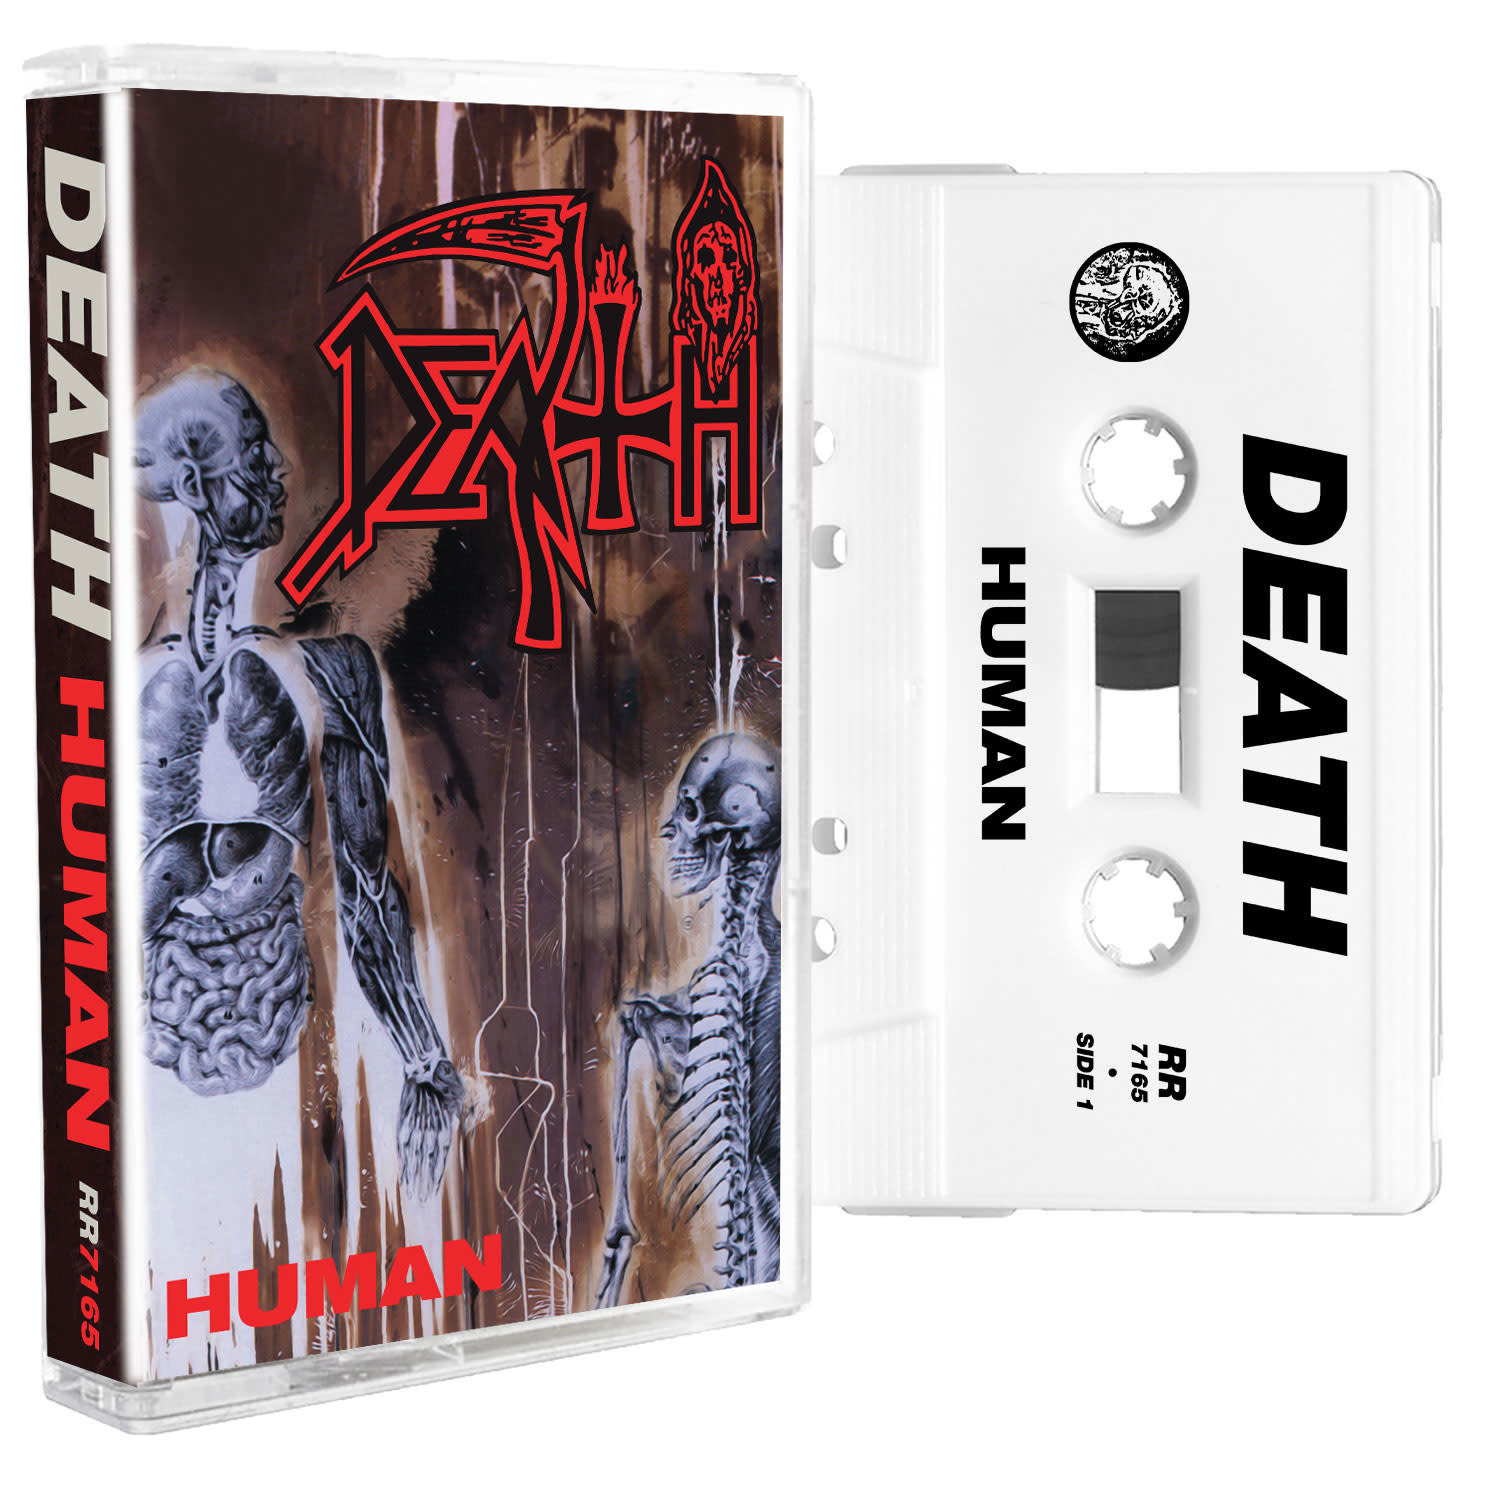 Metal Death - Human